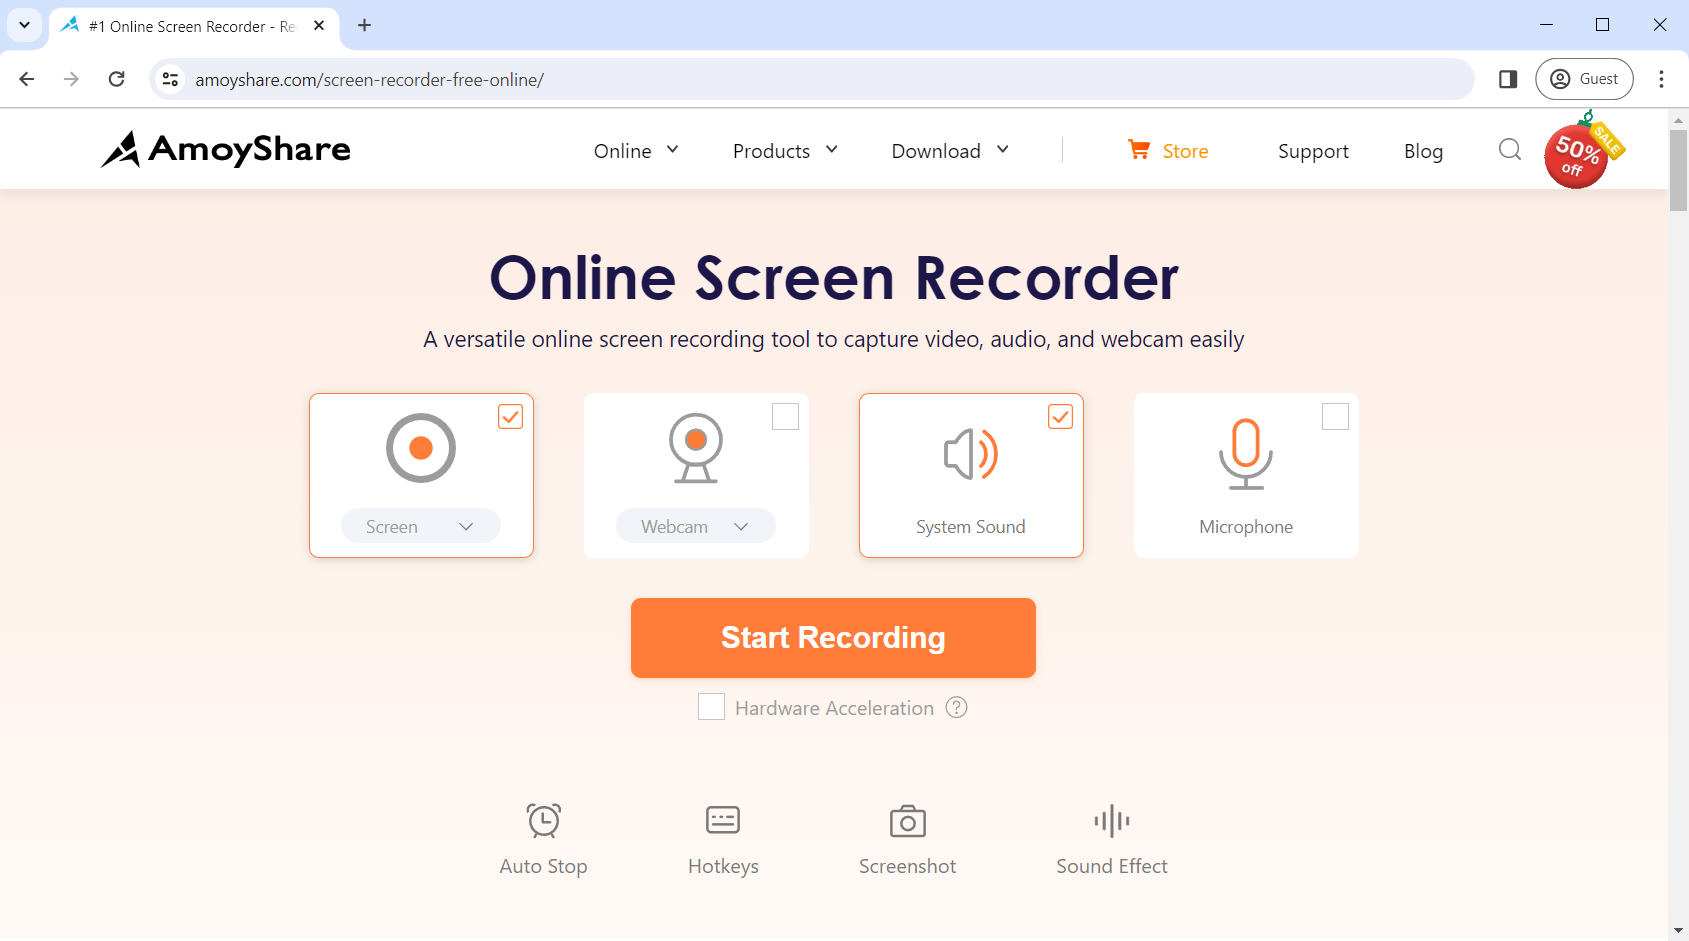 AmoyShare 온라인 스크린 레코더